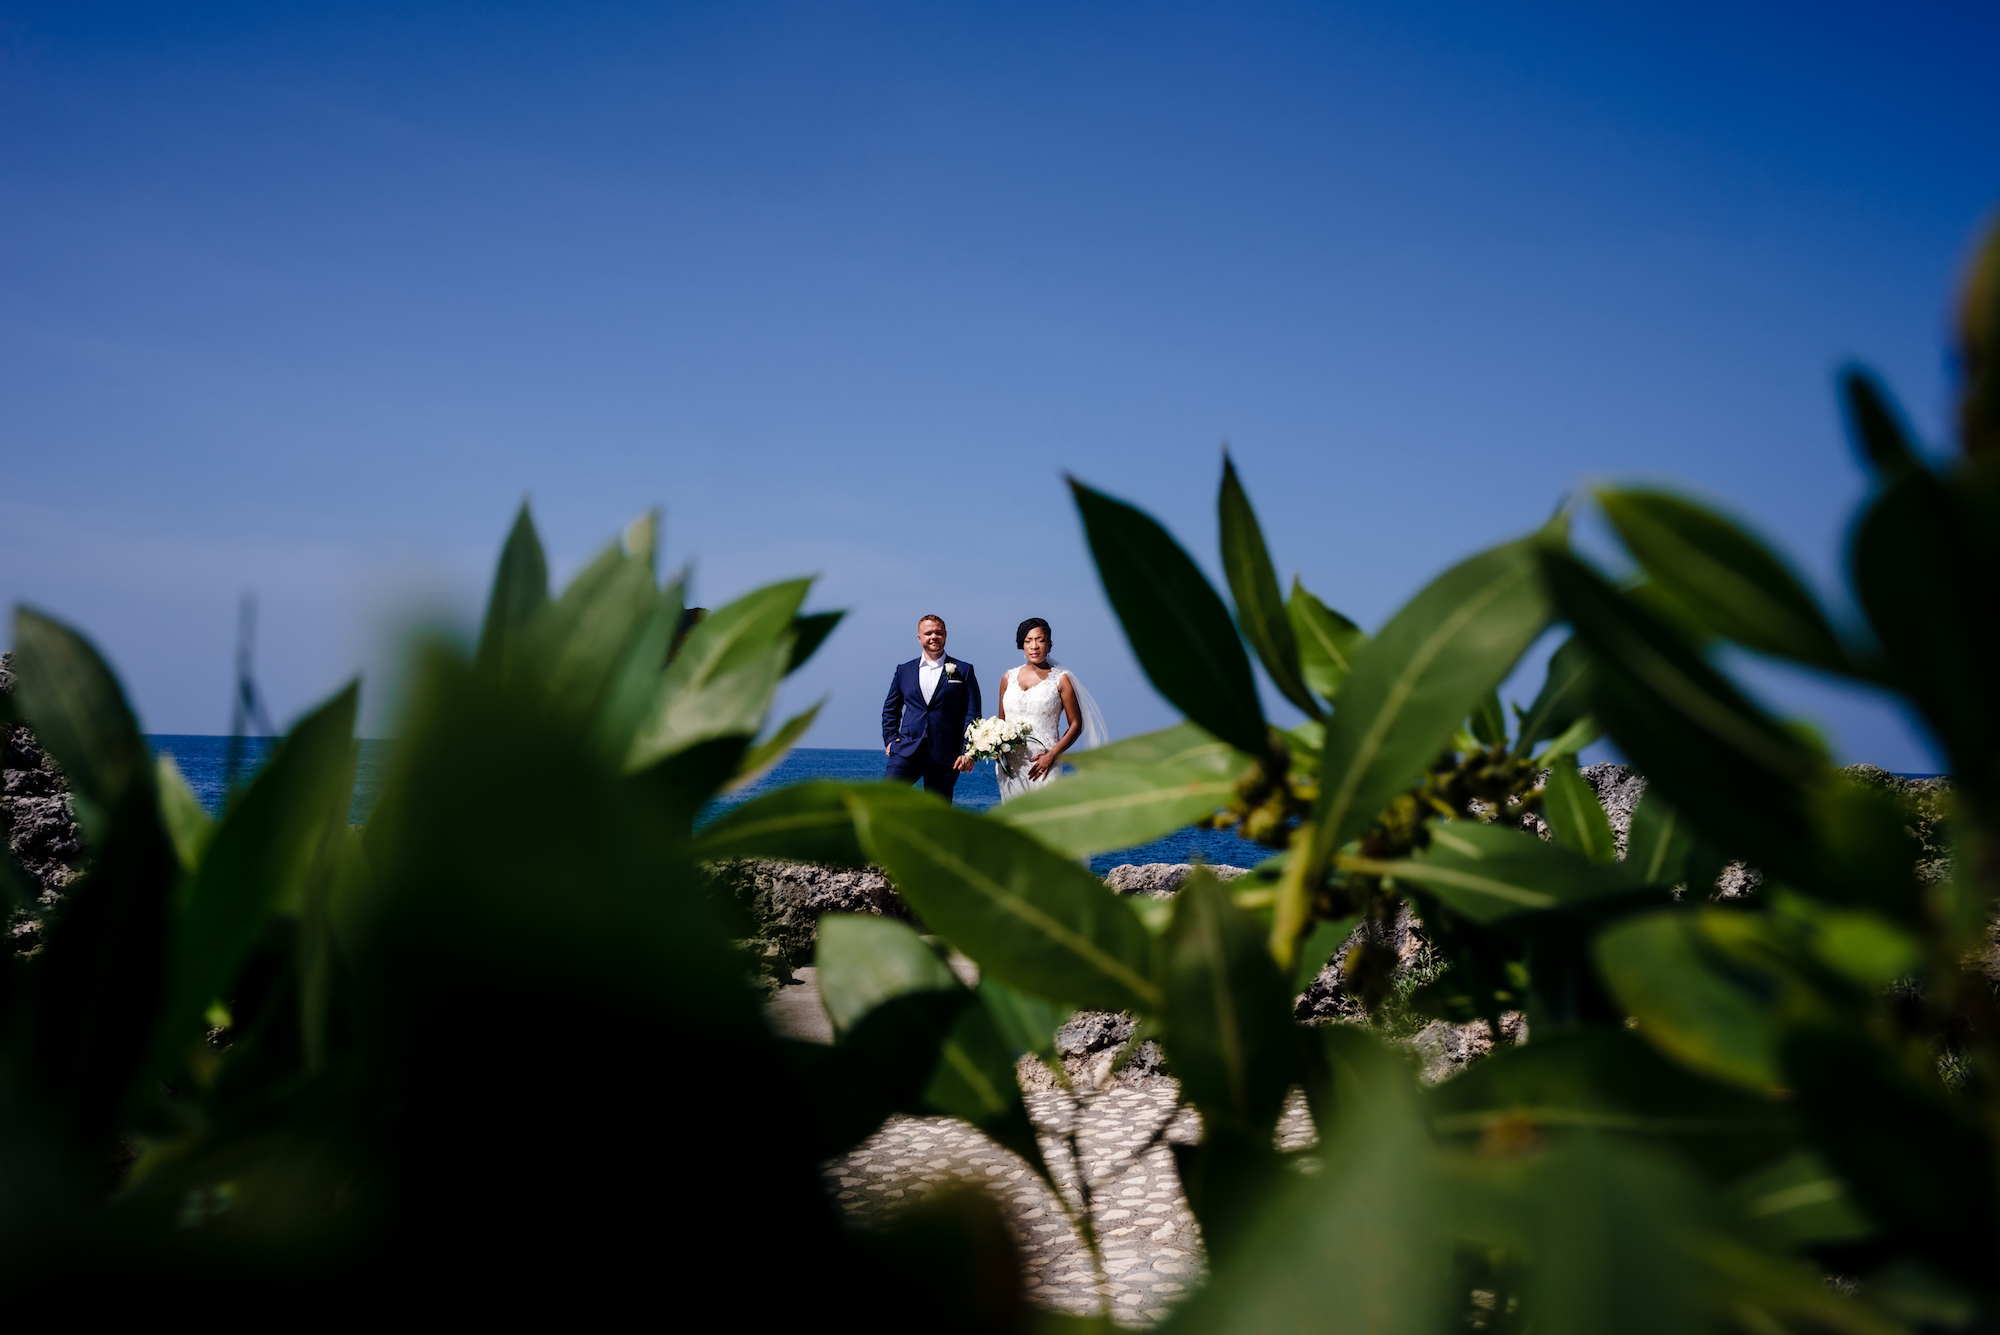 9 lyndah wells wedding photography visual flow presets